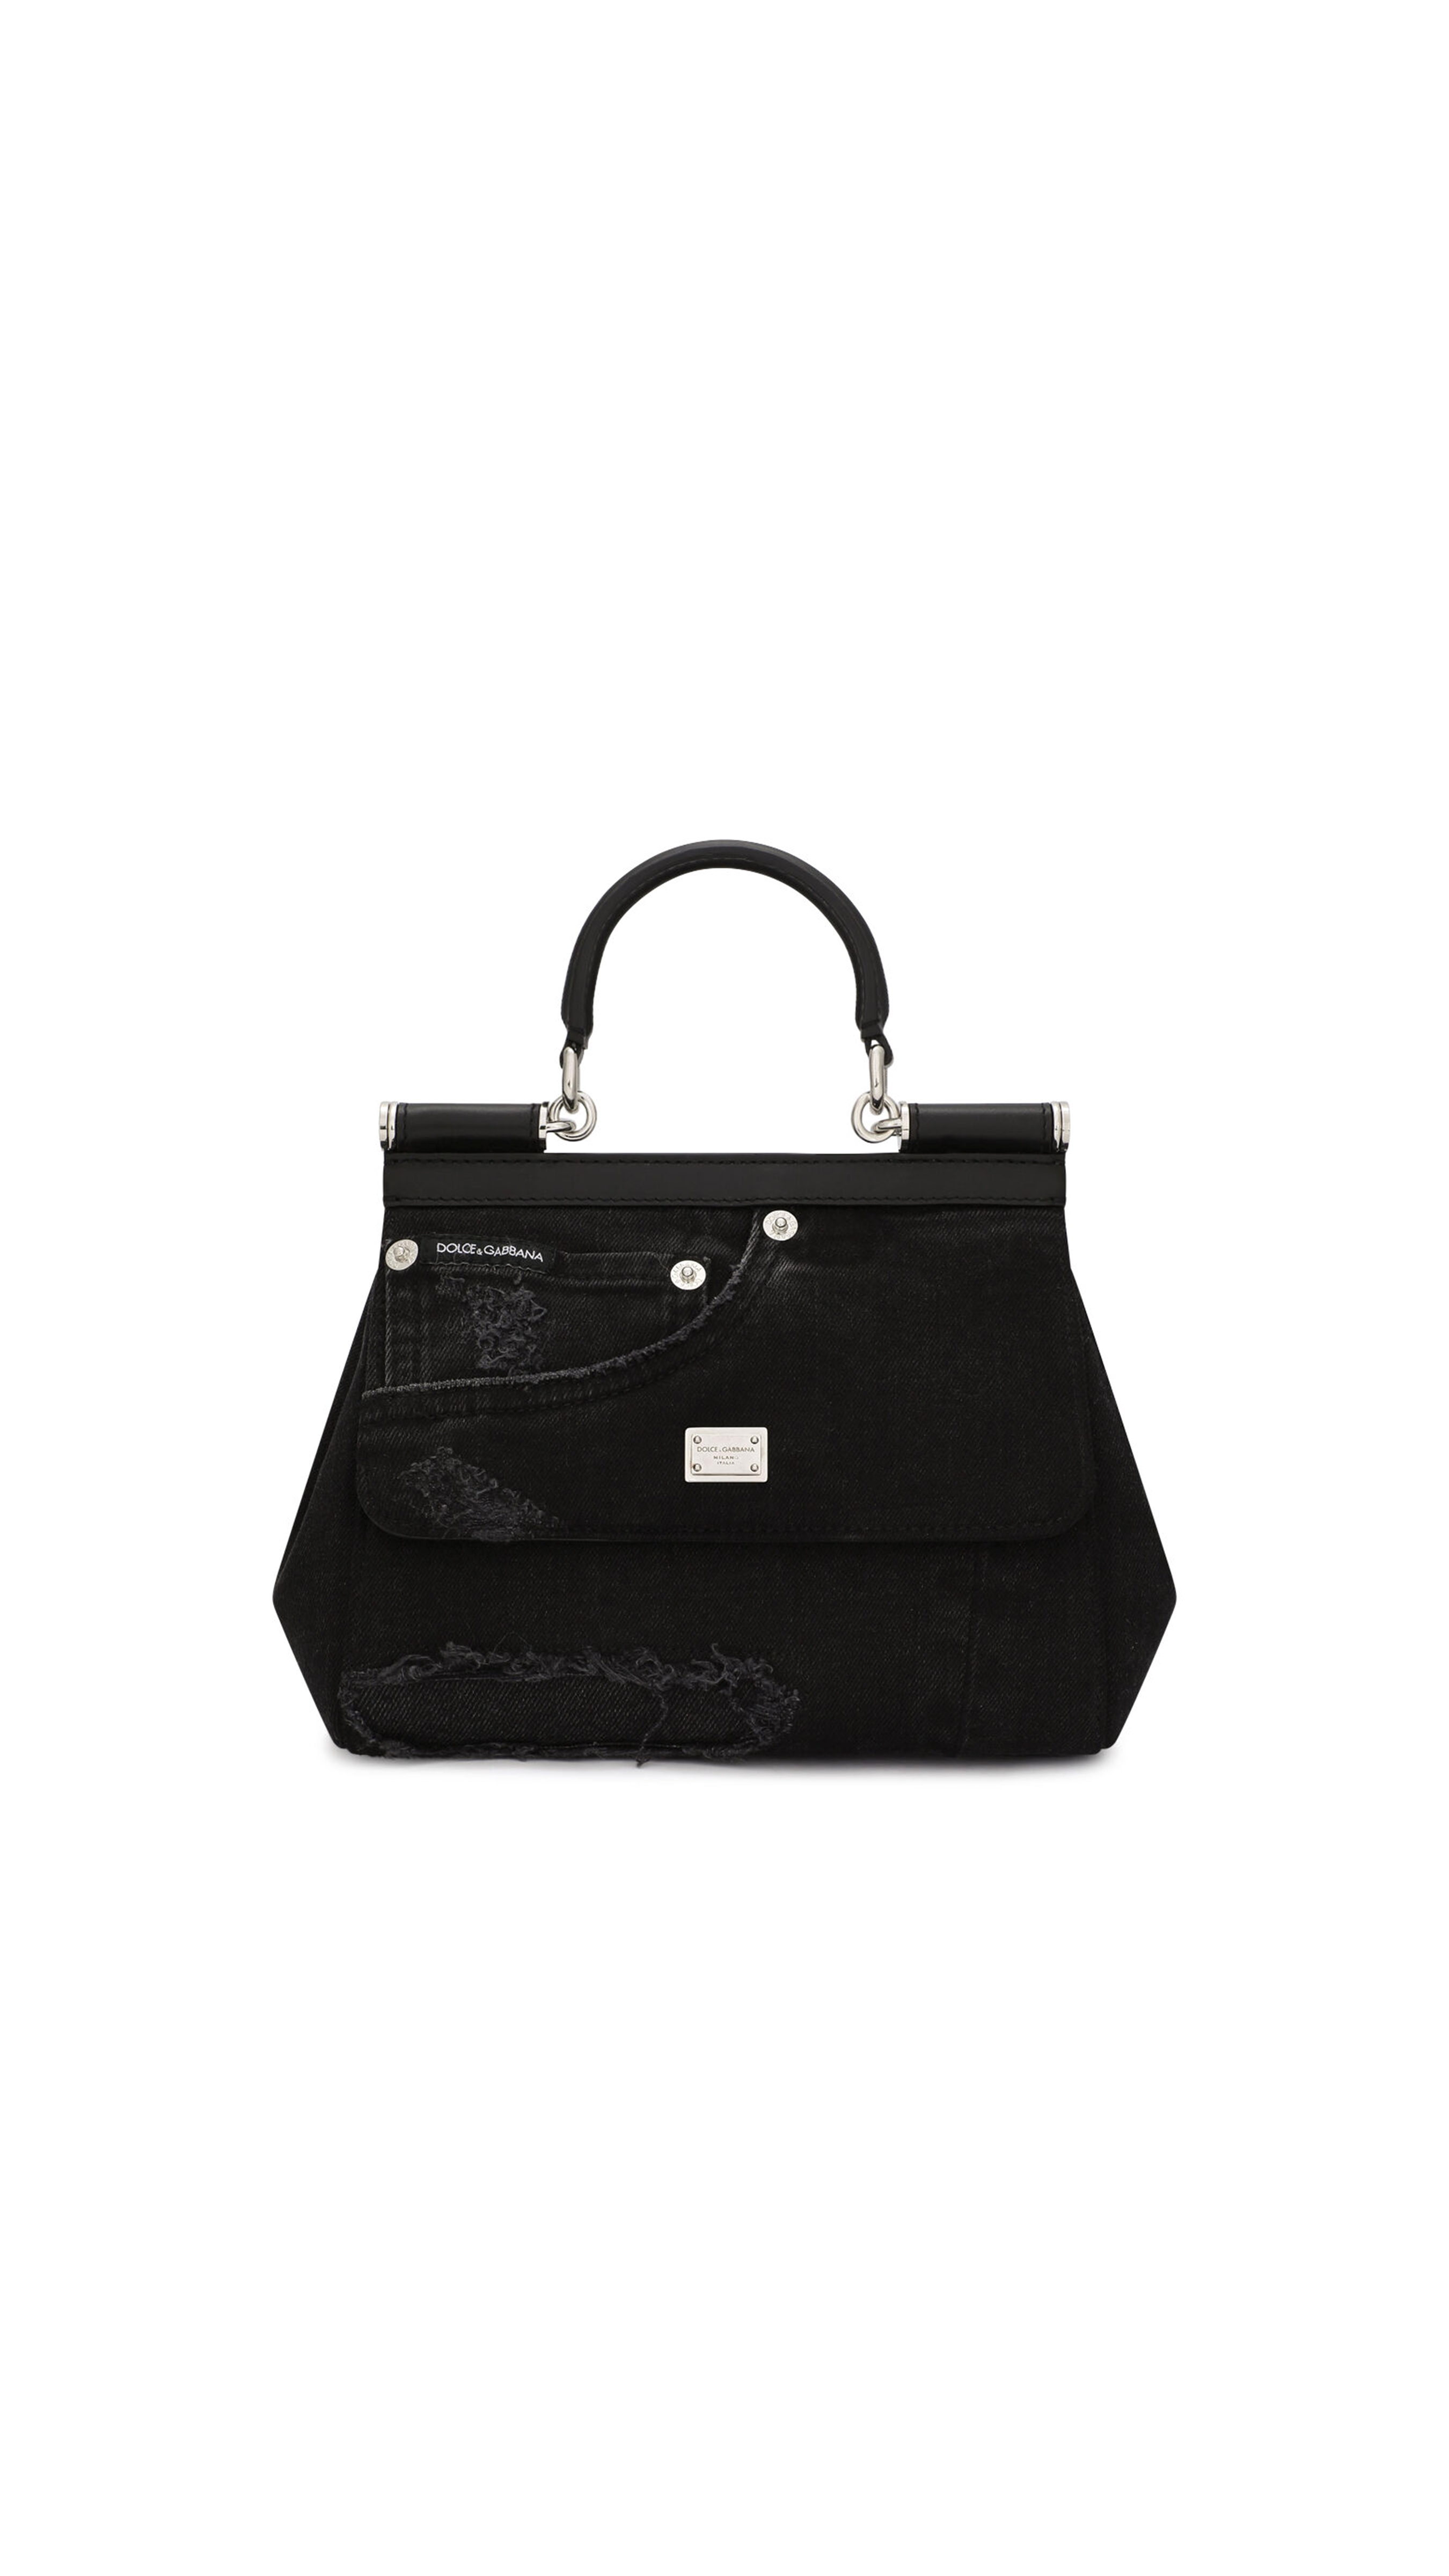 Dolce & Gabbana Sicily PM bag - ShopStyle